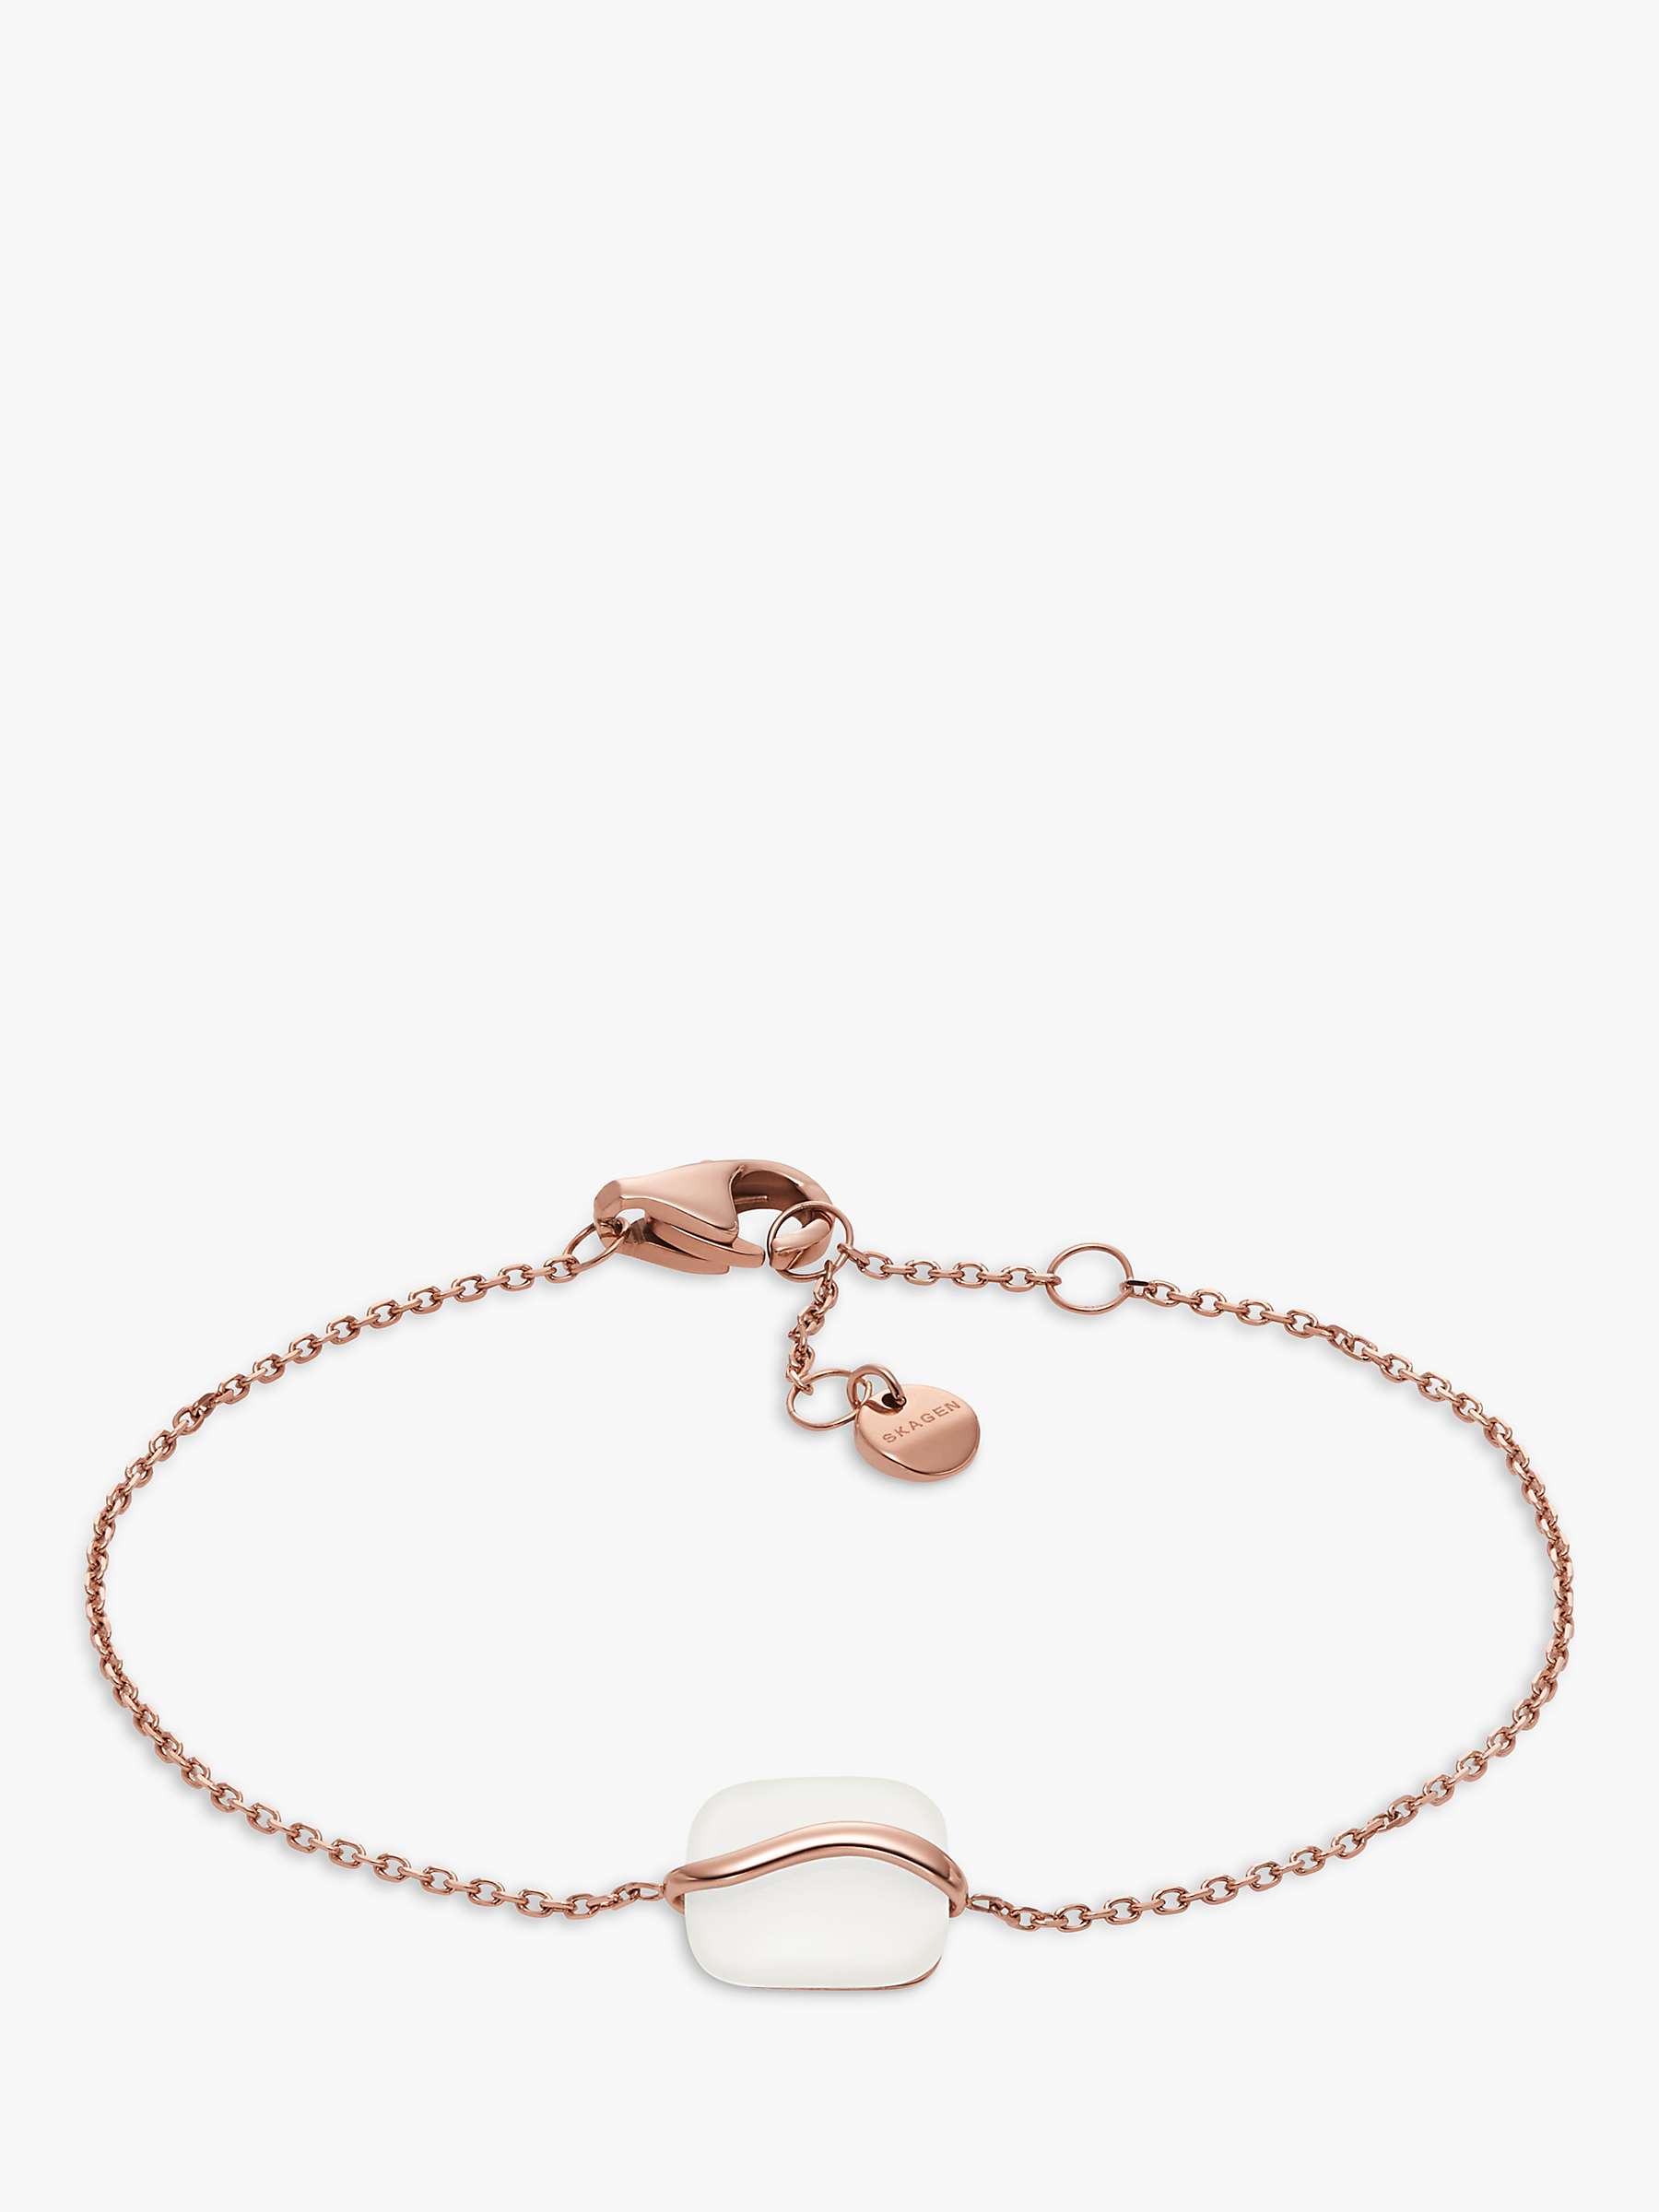 Buy Skagen Glass Stone Cable Chain Bracelet, Rose Gold/White Online at johnlewis.com